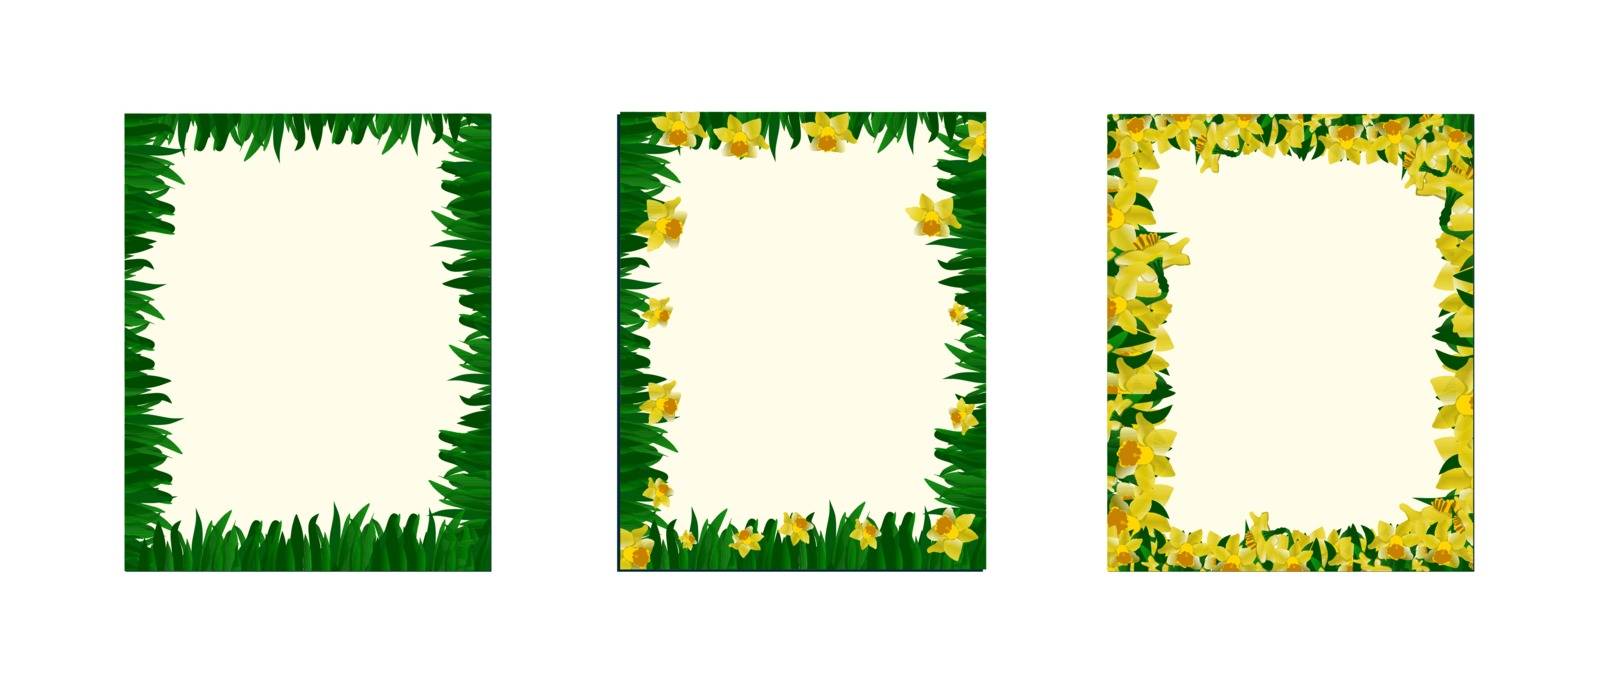 Daffodils invitation template on white by Nata_Prando